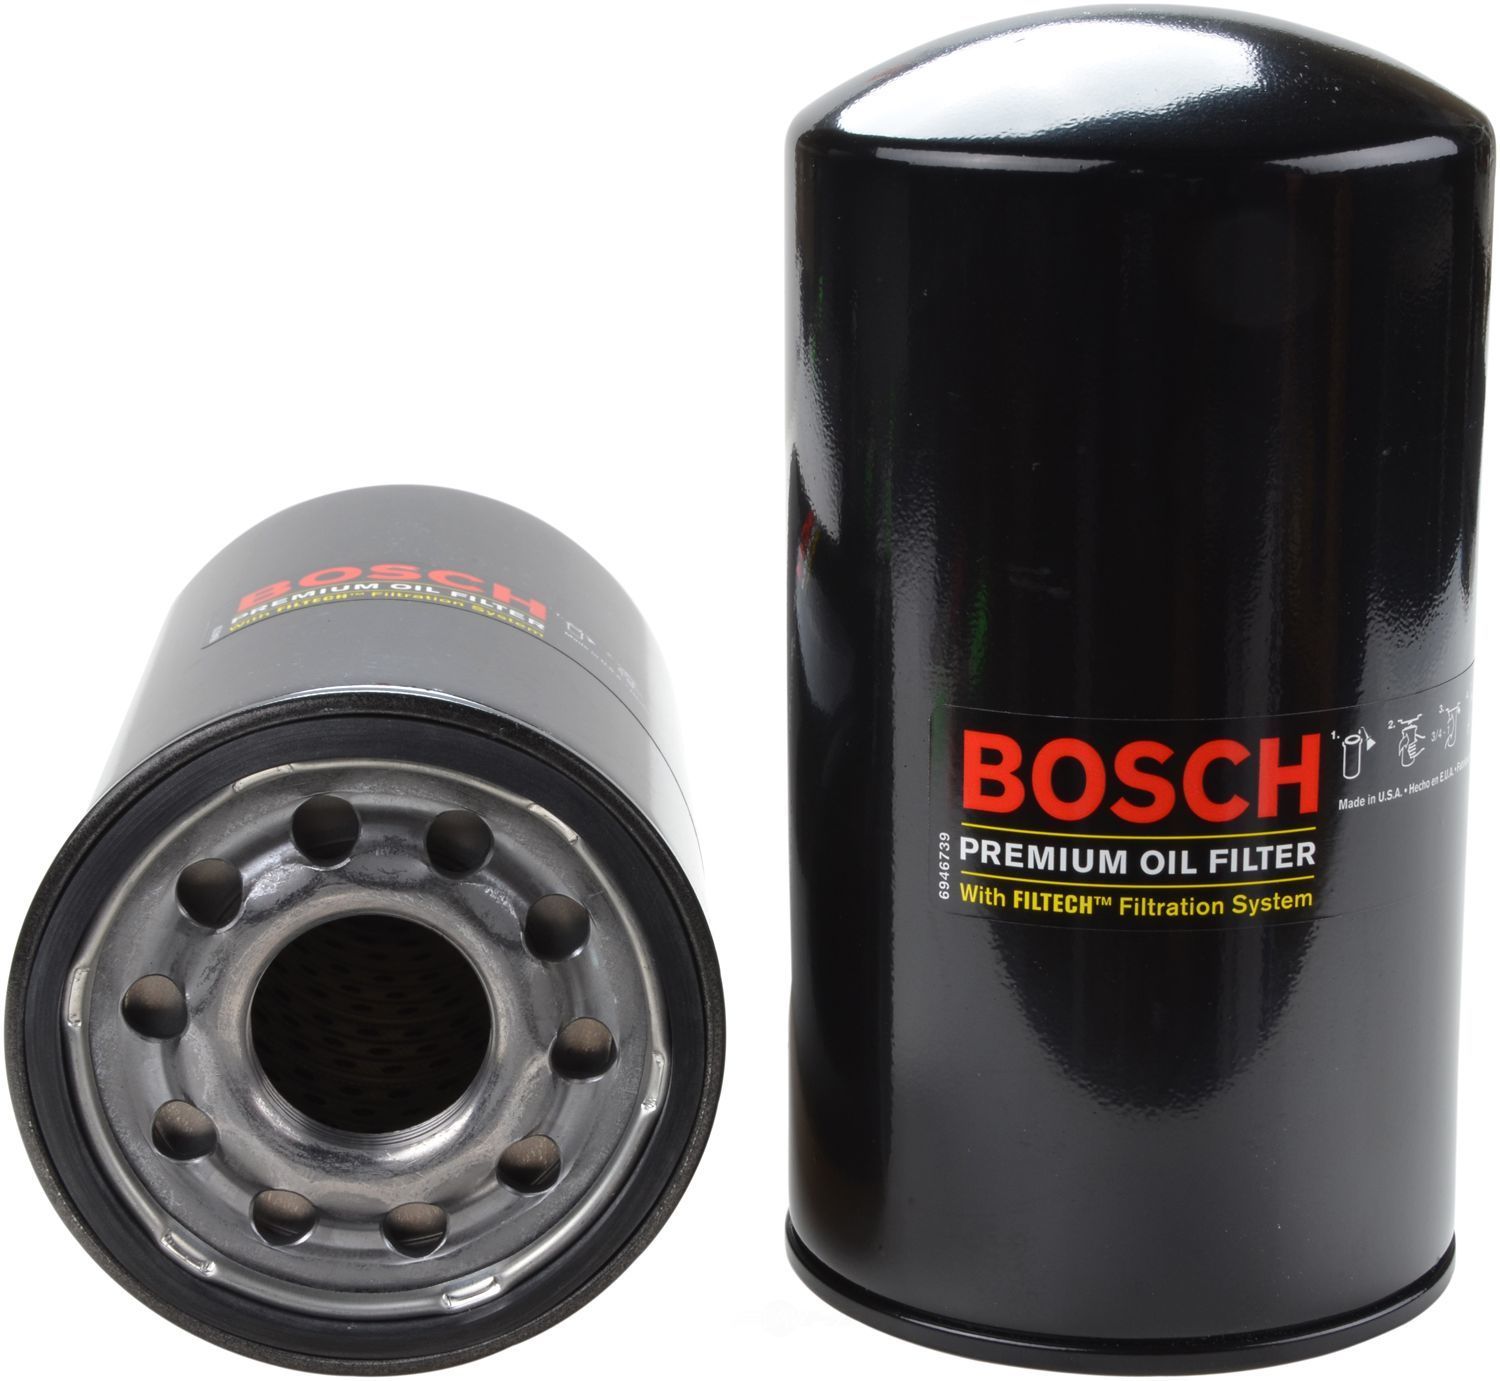 BOSCH - Premium Oil Filter - BOS 3530